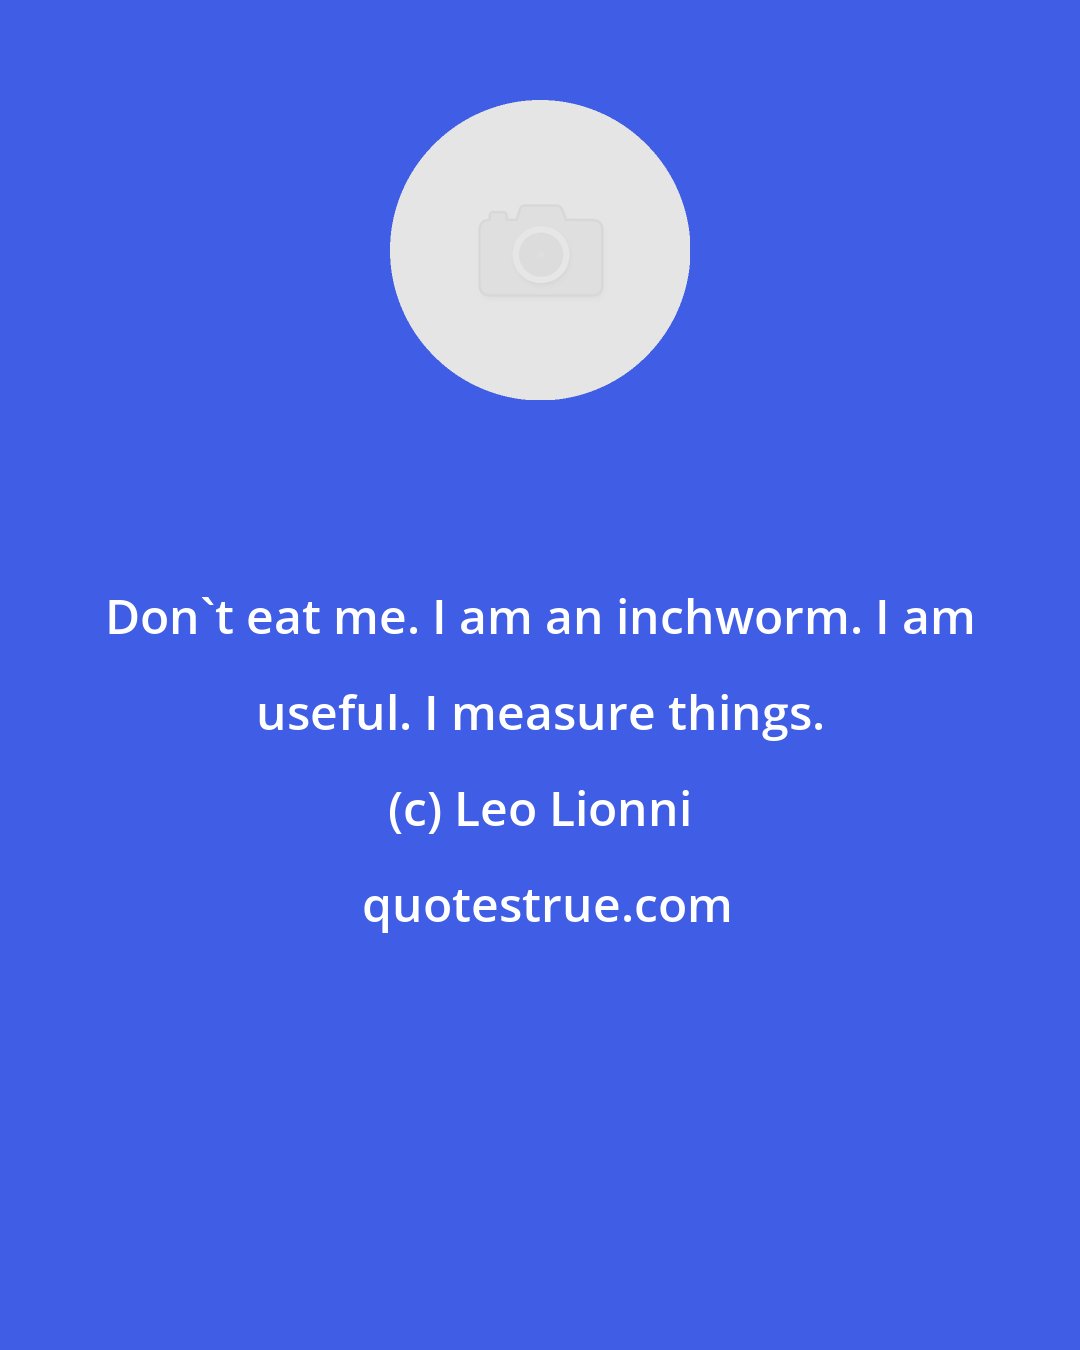 Leo Lionni: Don't eat me. I am an inchworm. I am useful. I measure things.